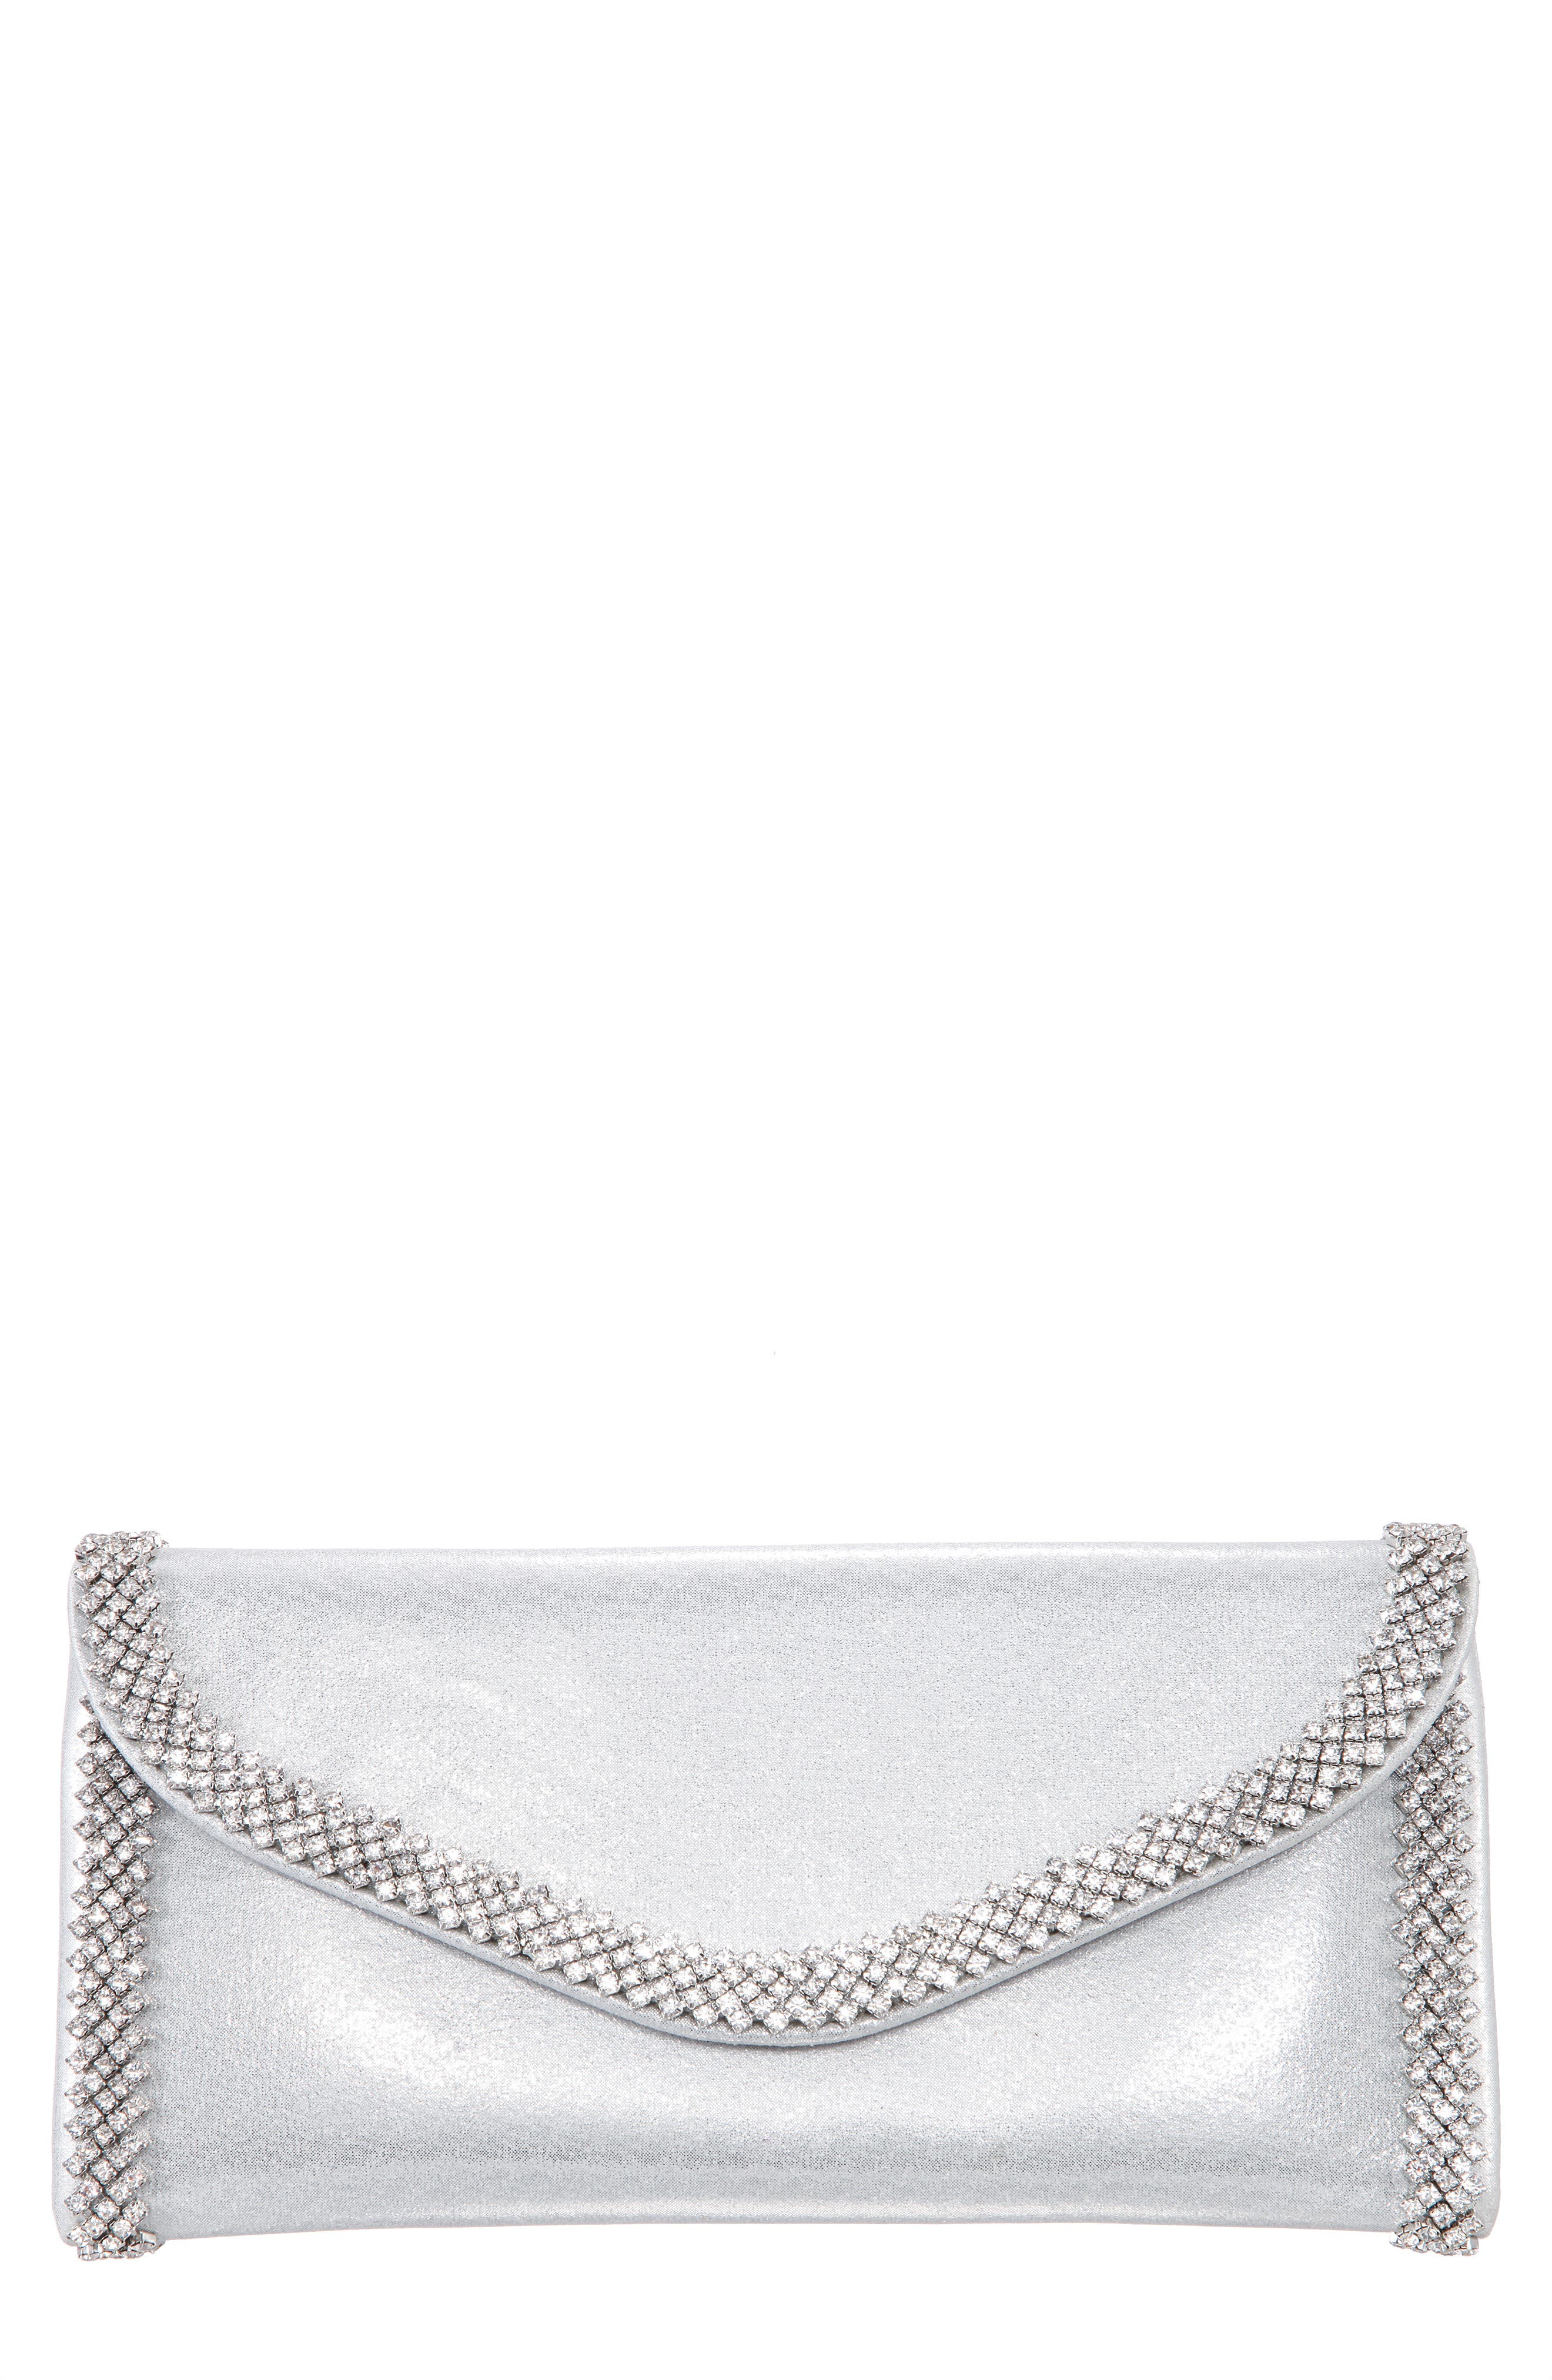 Ladies Designer Metallic Envelope Style Clutch Bag Handbag Evening Purse KH732